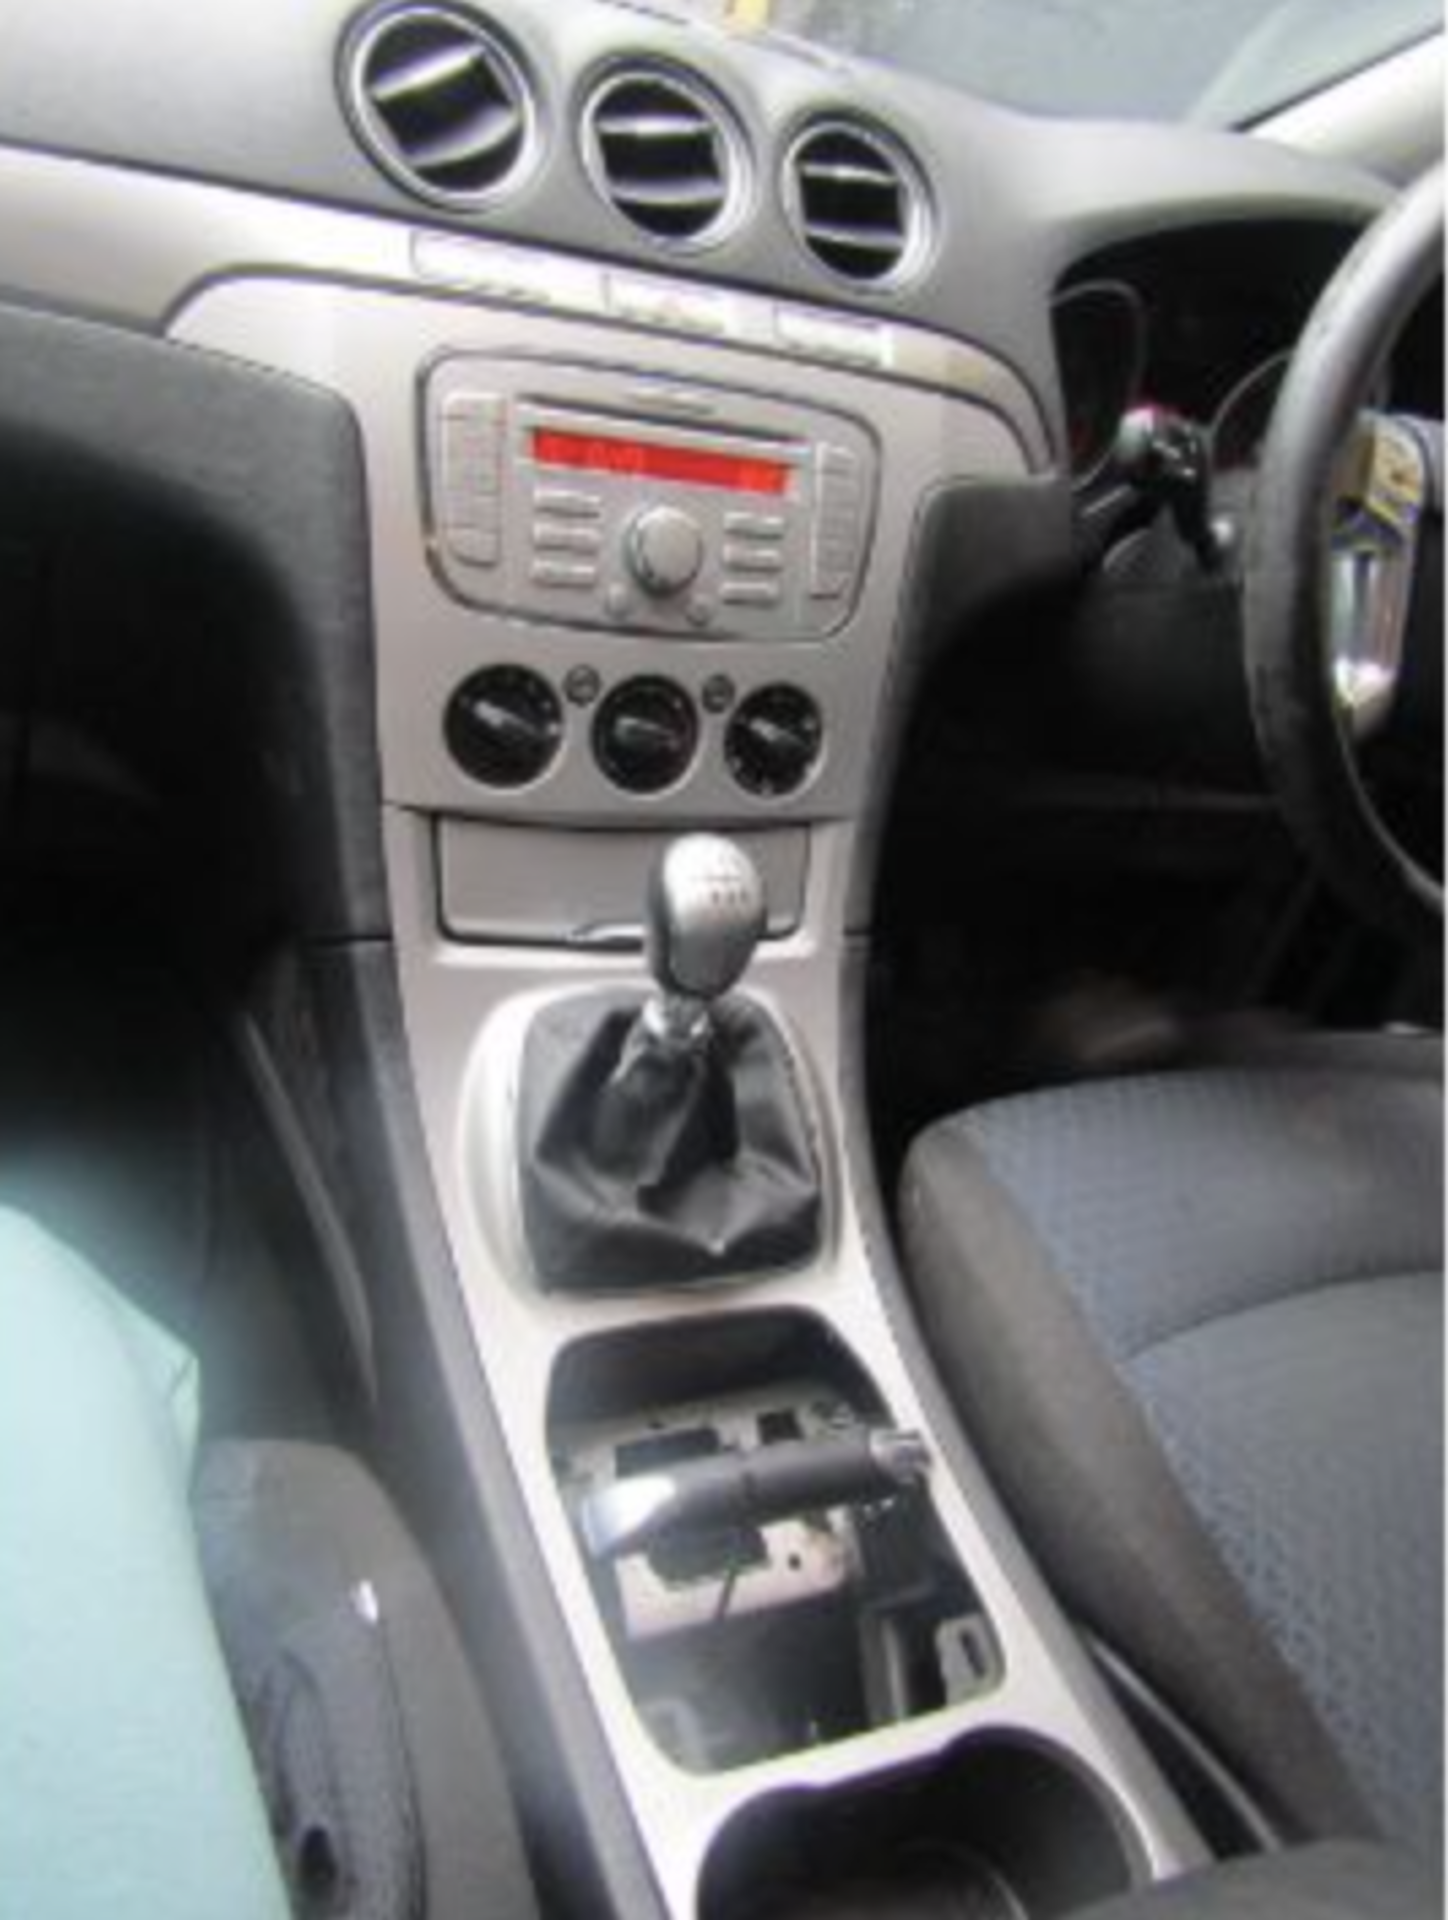 2009 Ford S-Max MPV 1800cc Turbo Diesel - Image 5 of 14